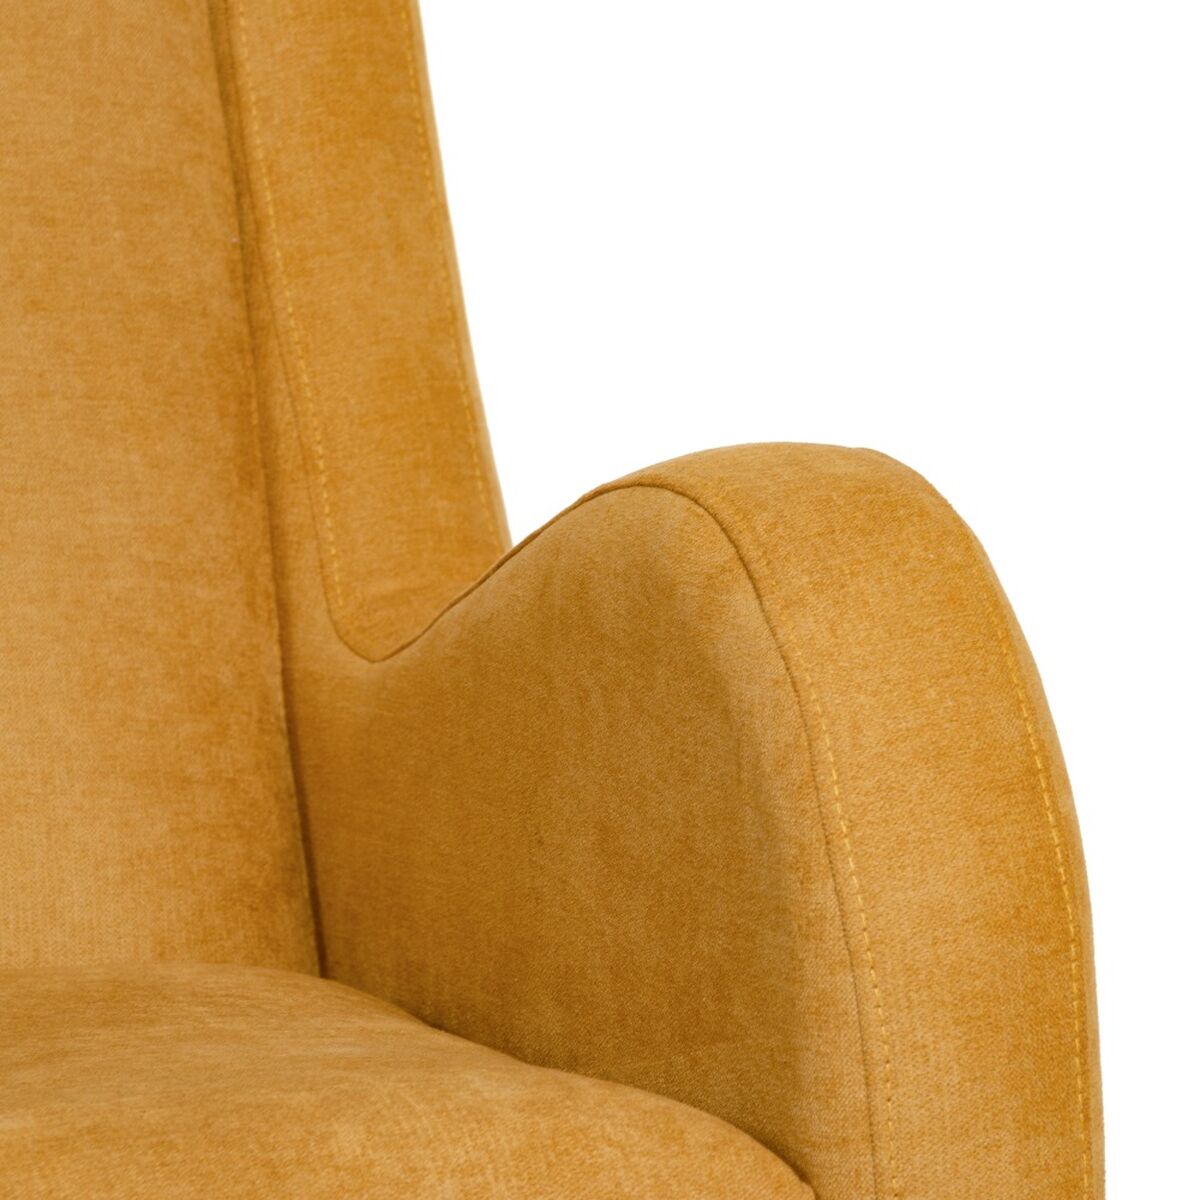 Fotel 70 x 82 x 88 cm Tkanina syntetyczna Drewno Musztarda